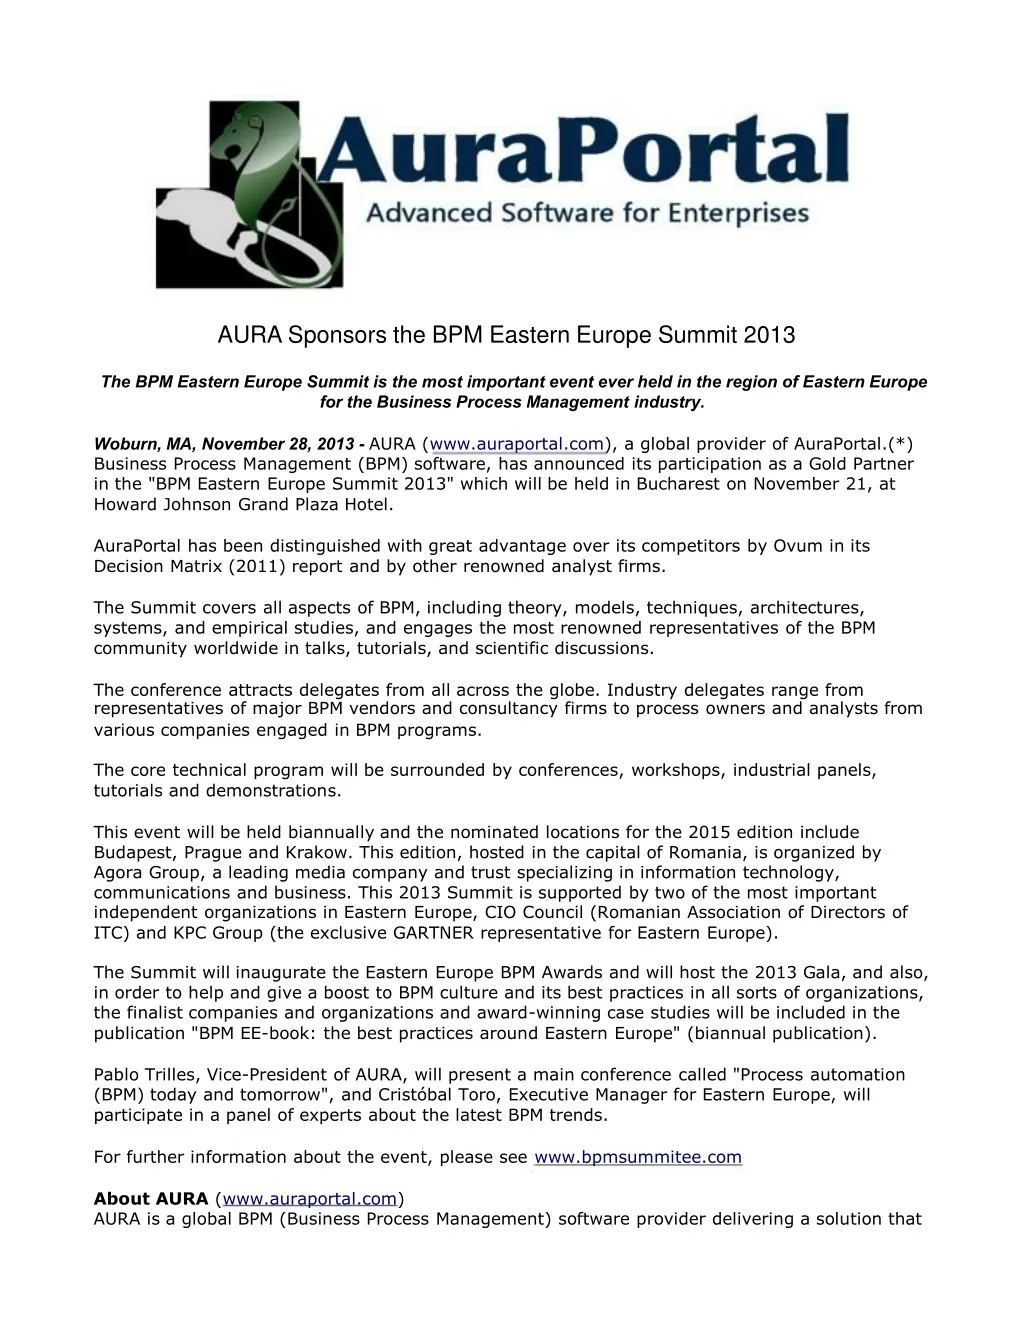 aura sponsors the bpm eastern europe summit 2013